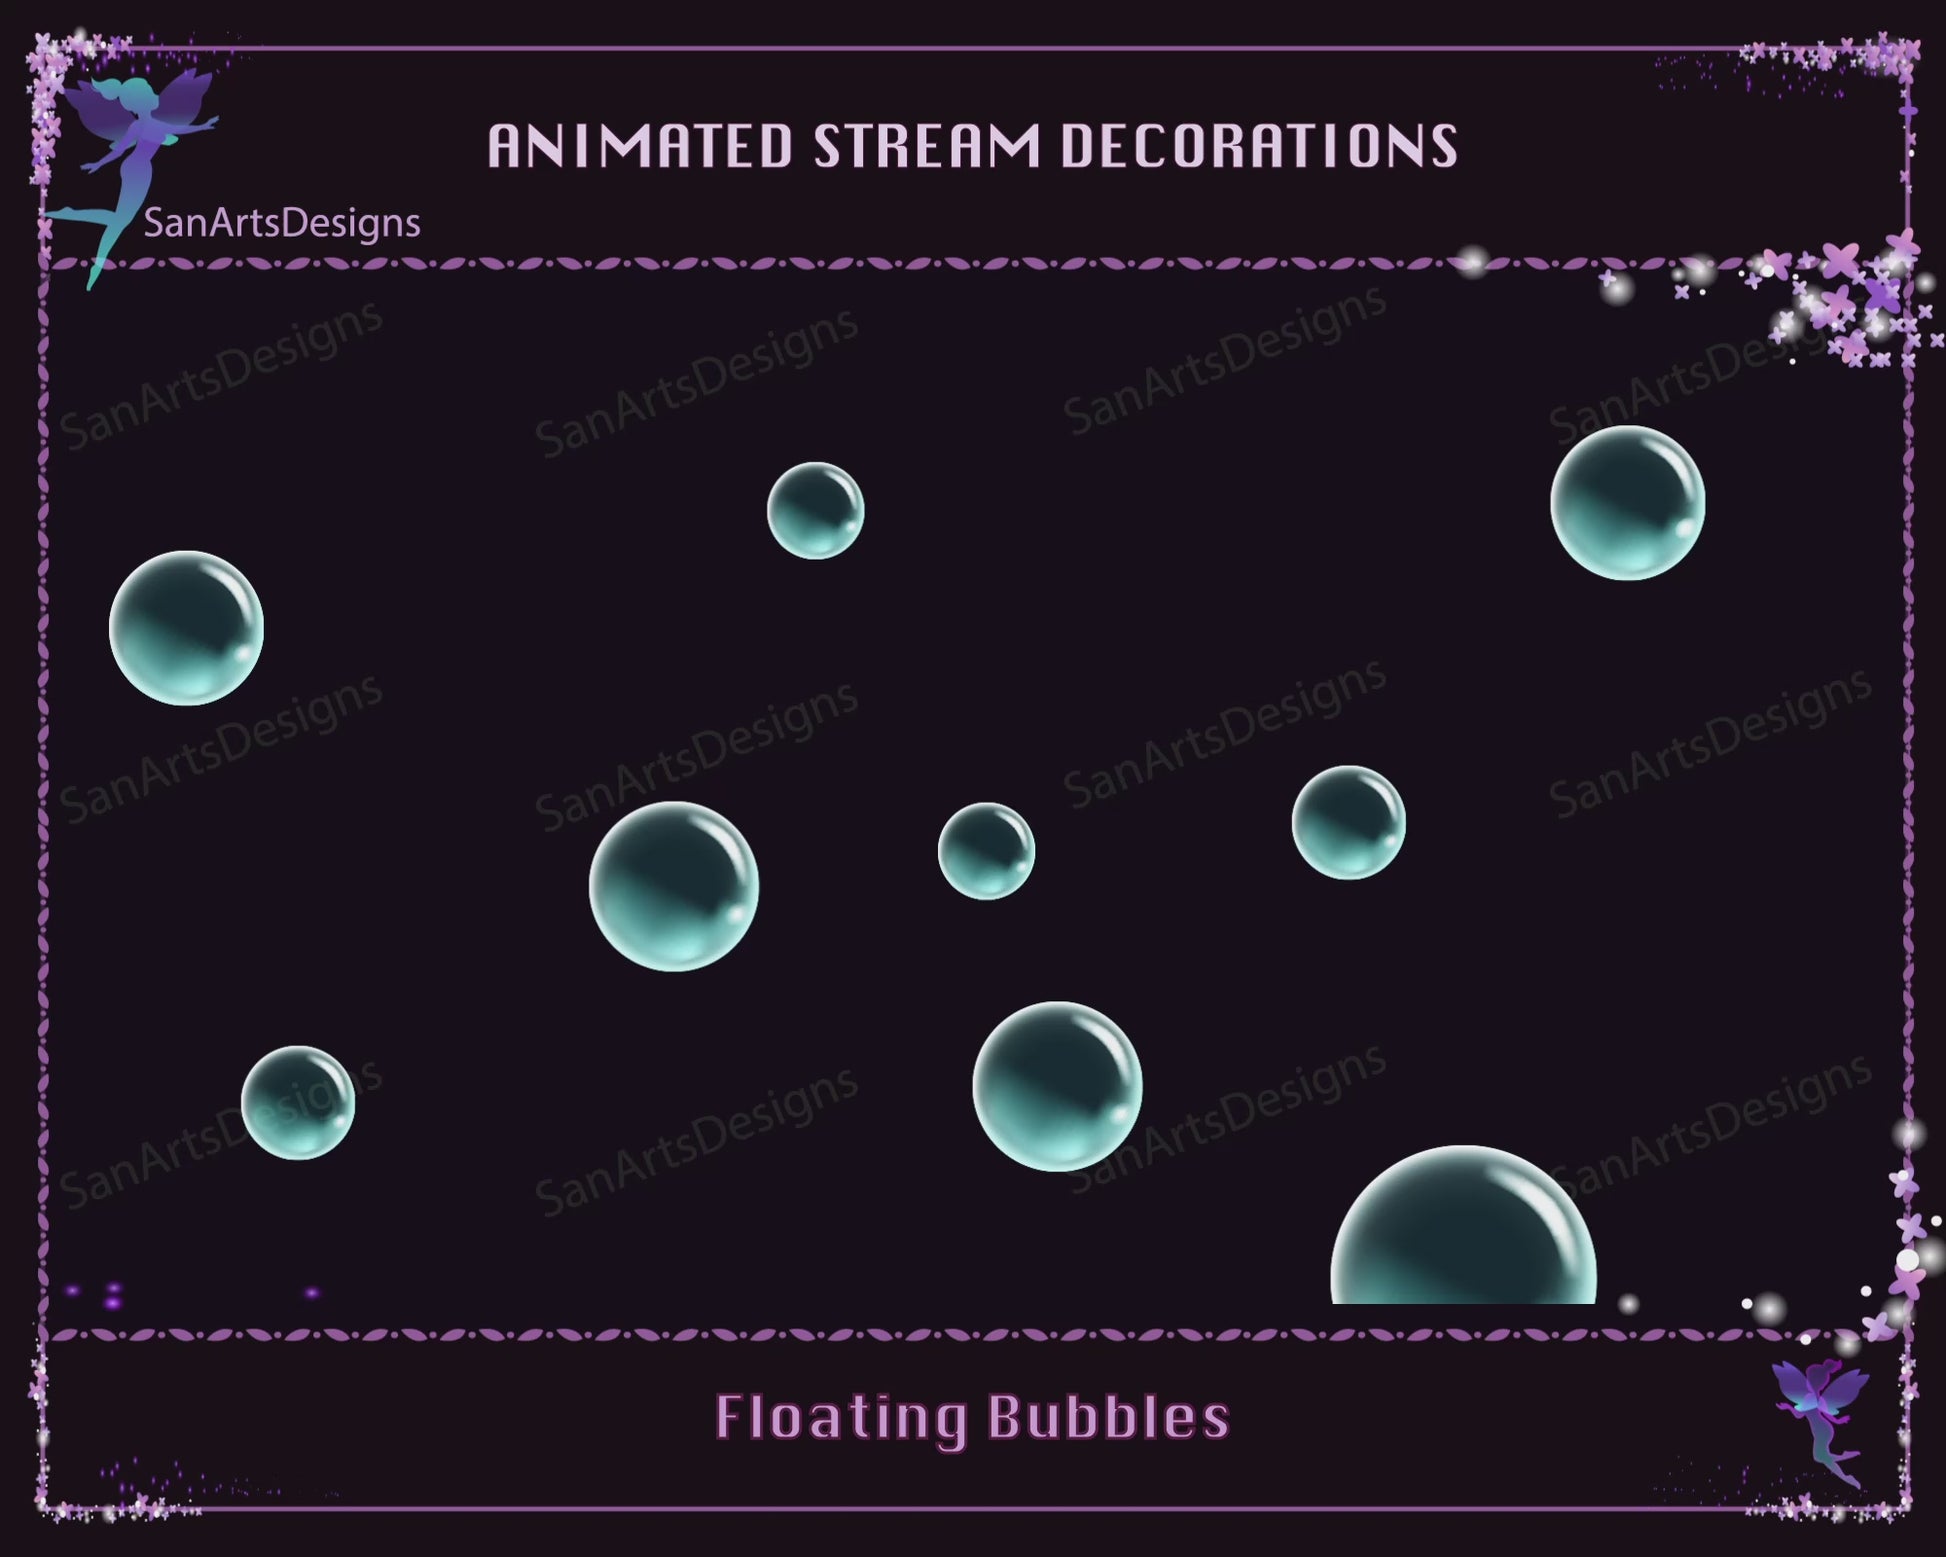 Floating Bubbles Animated Stream Decoration